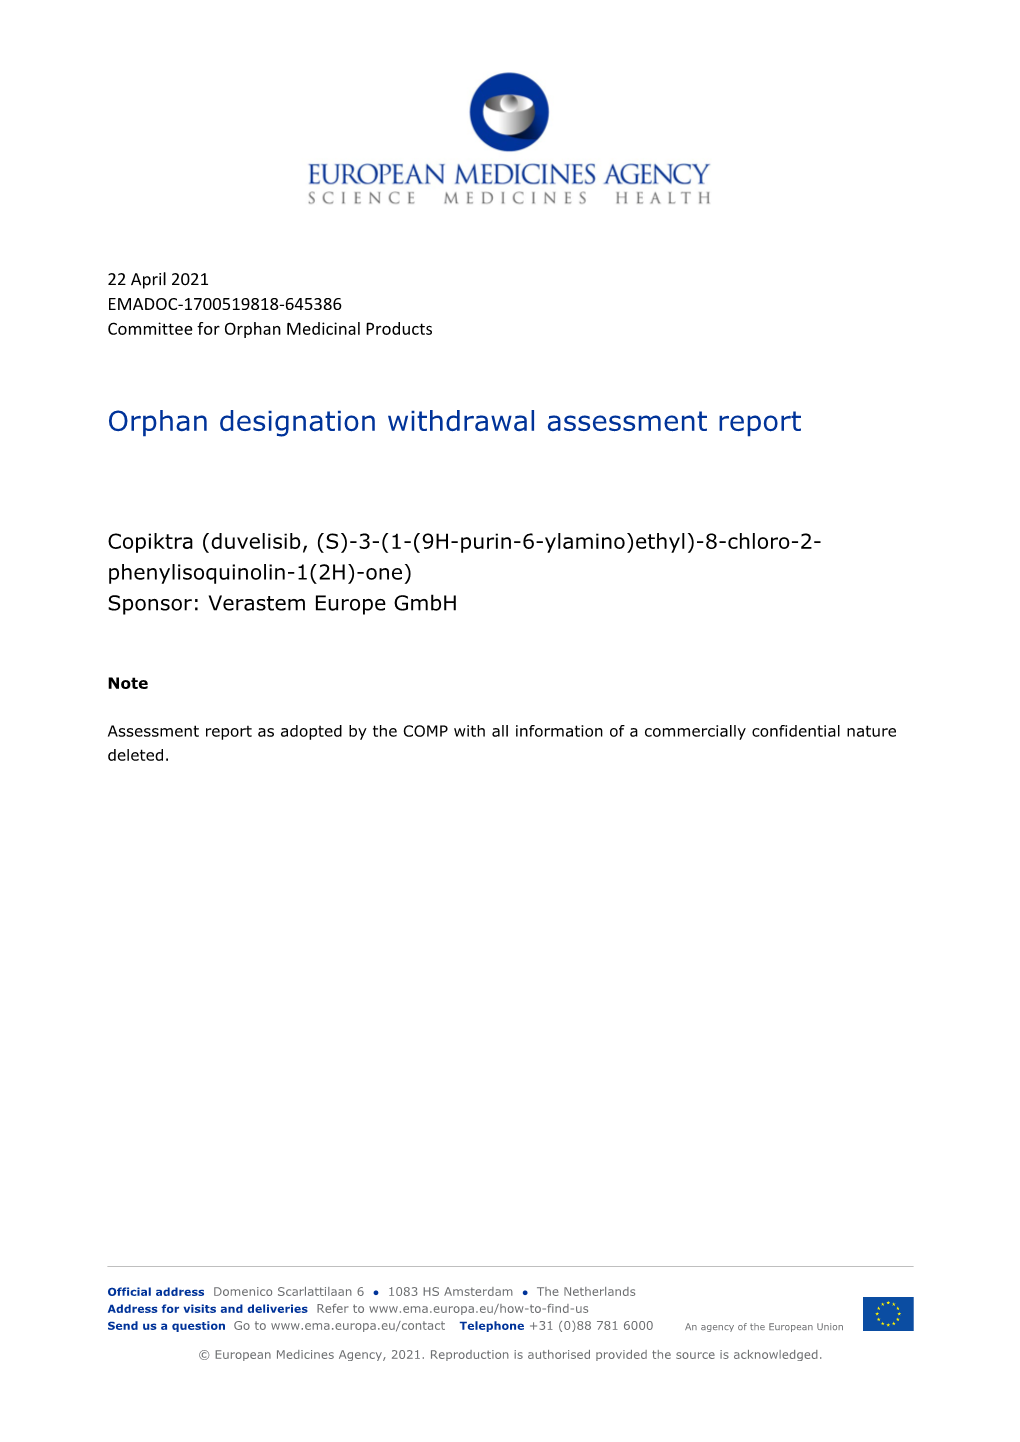 Withdrawal Assessment Report